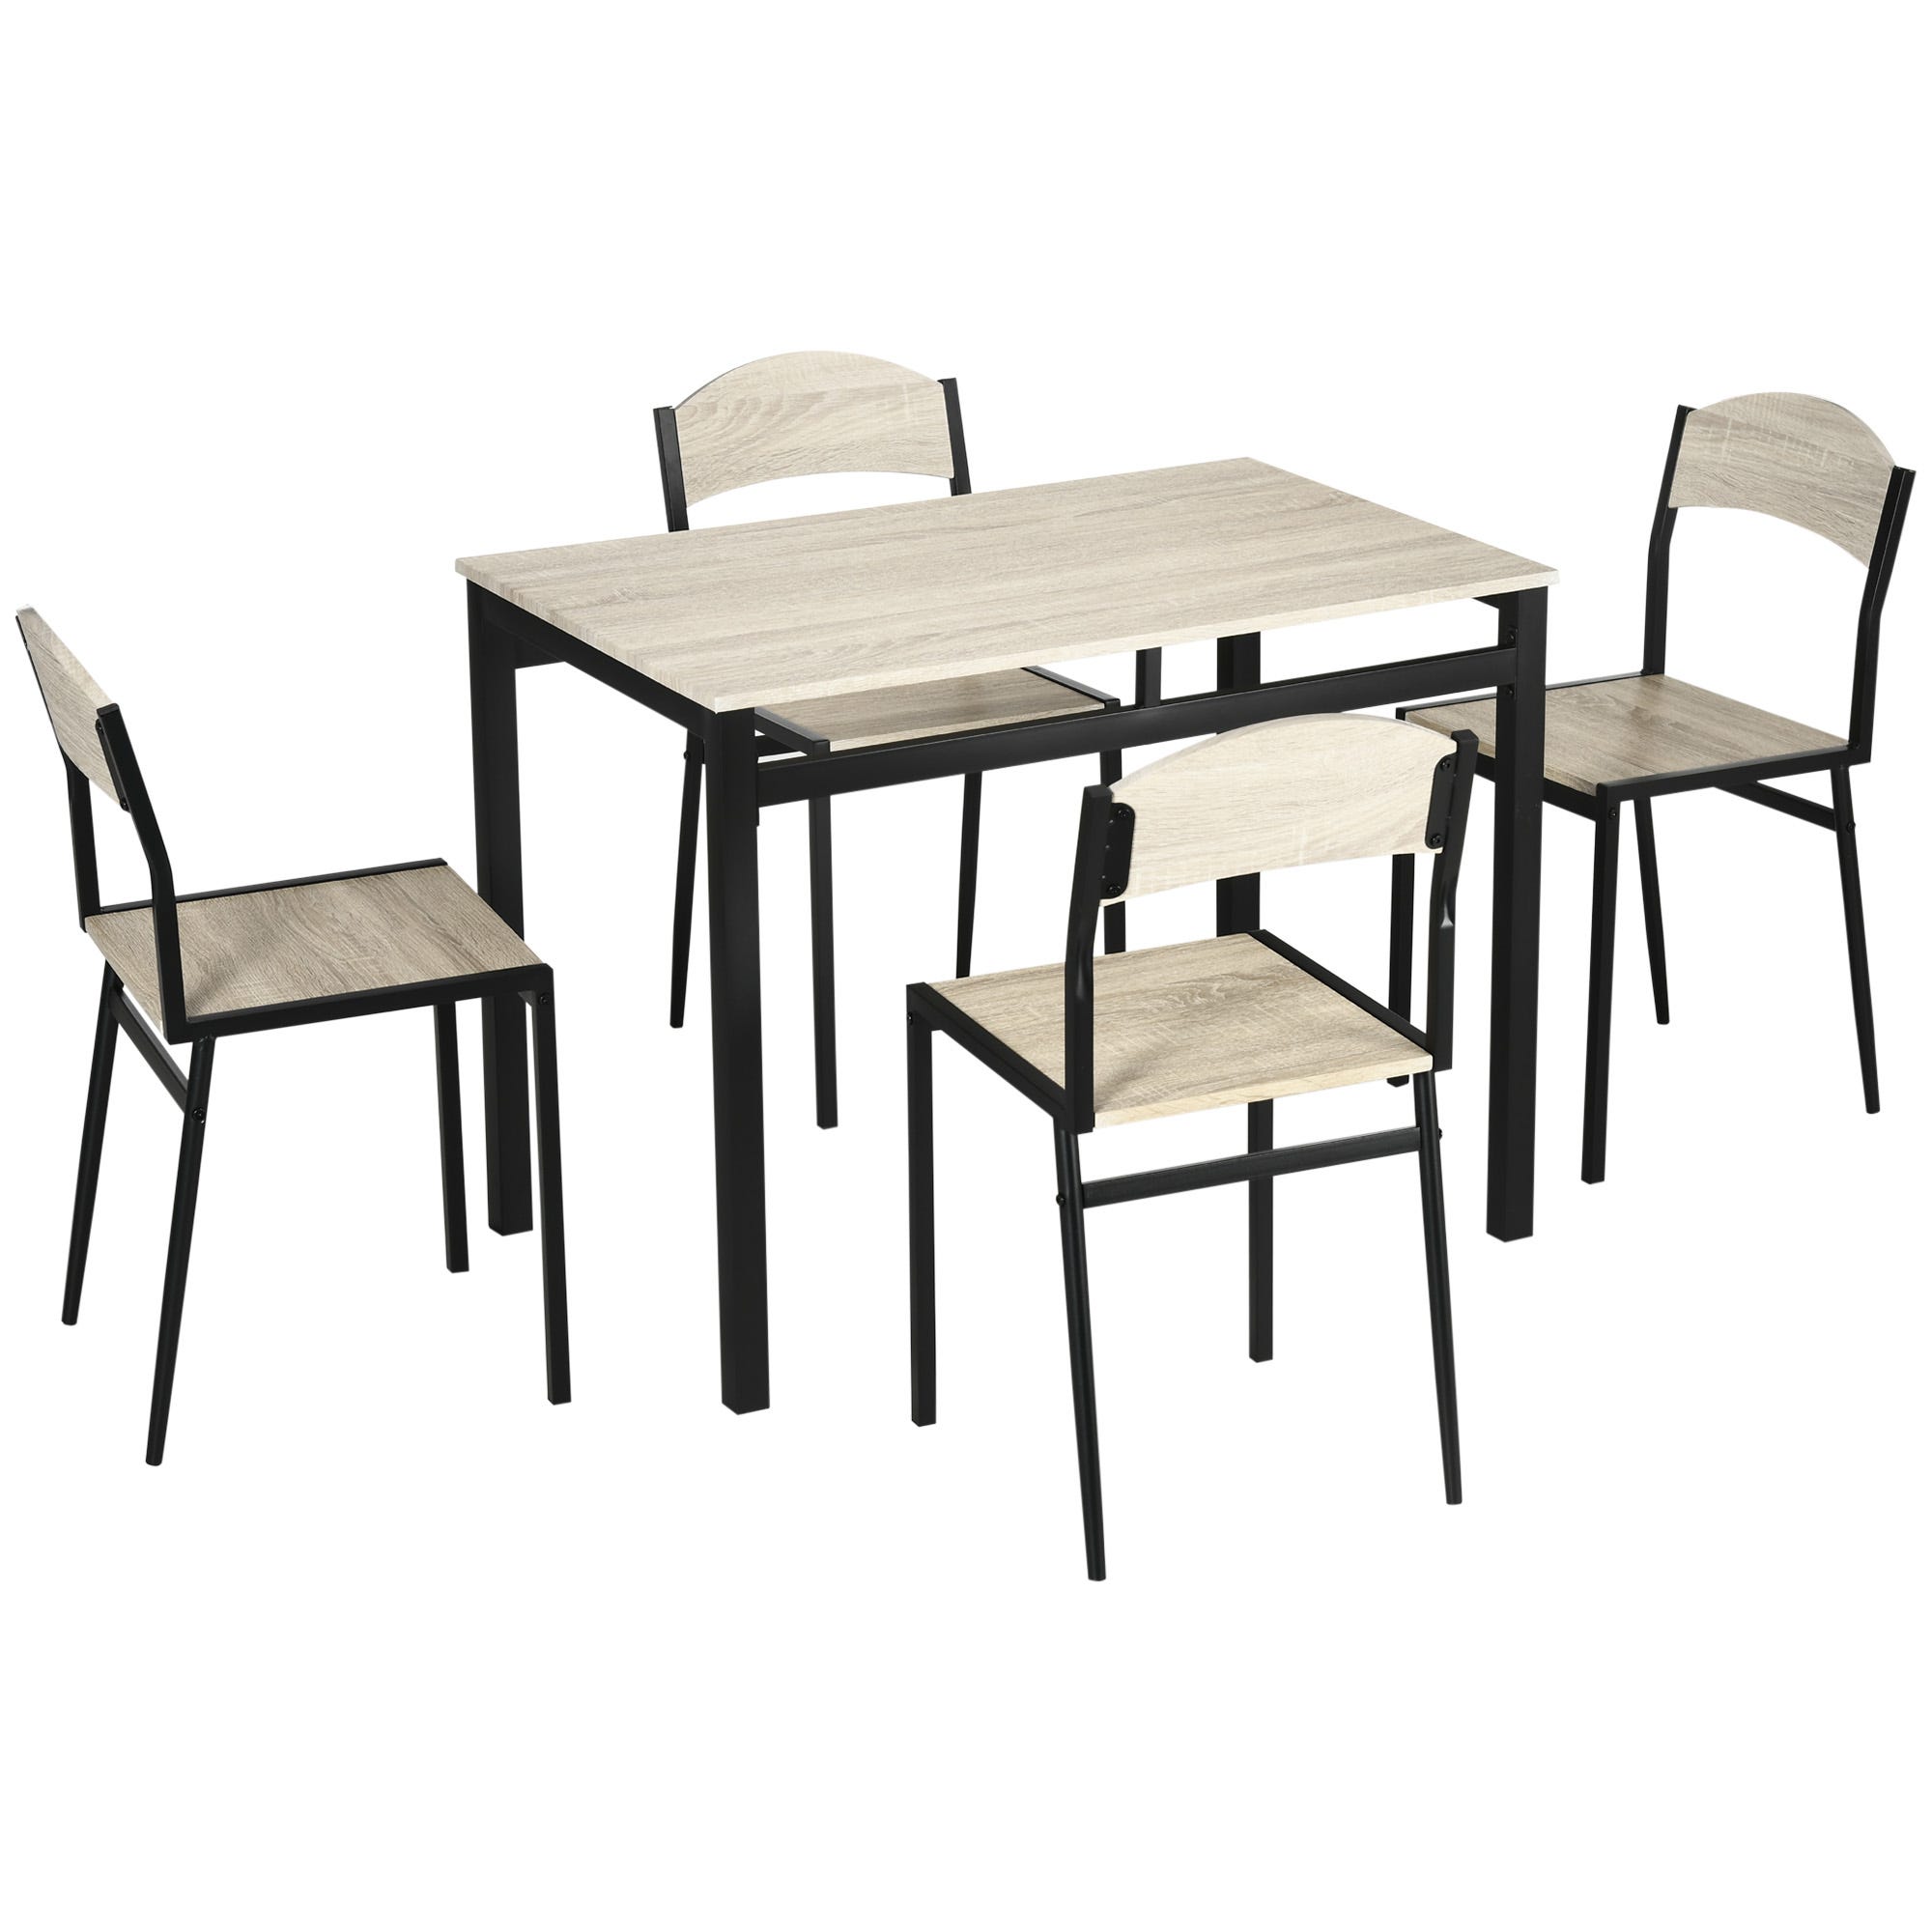 Set da Pranzo Tavolo e 4 Sedie Seduta Imbottita in Metallo e MDF